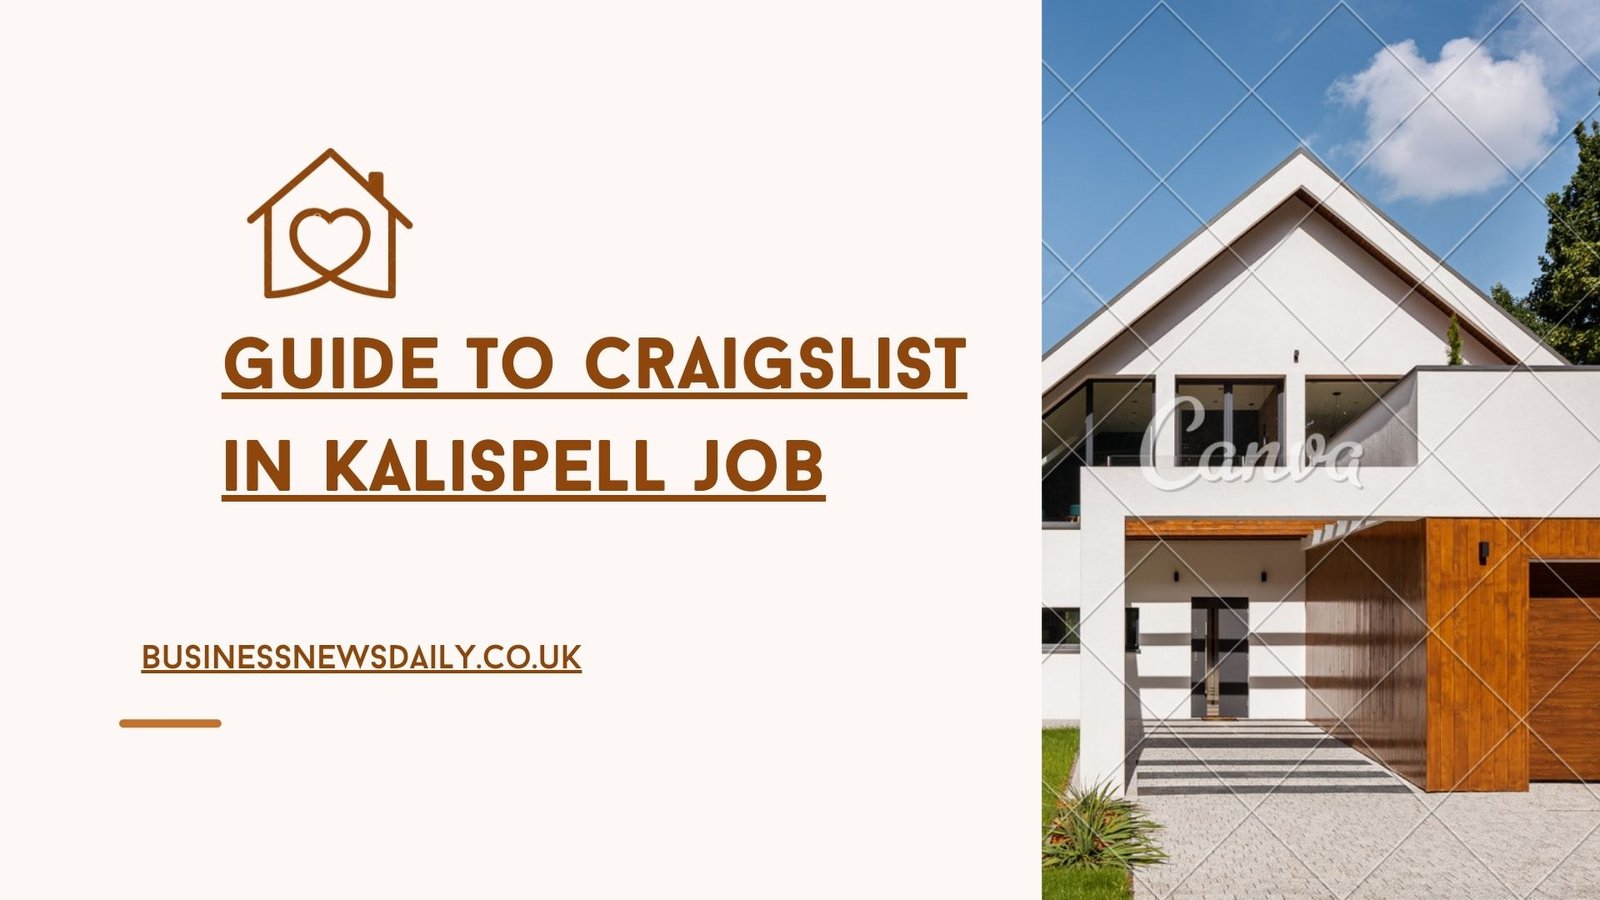 Guide to Craigslist in Kalispell Job